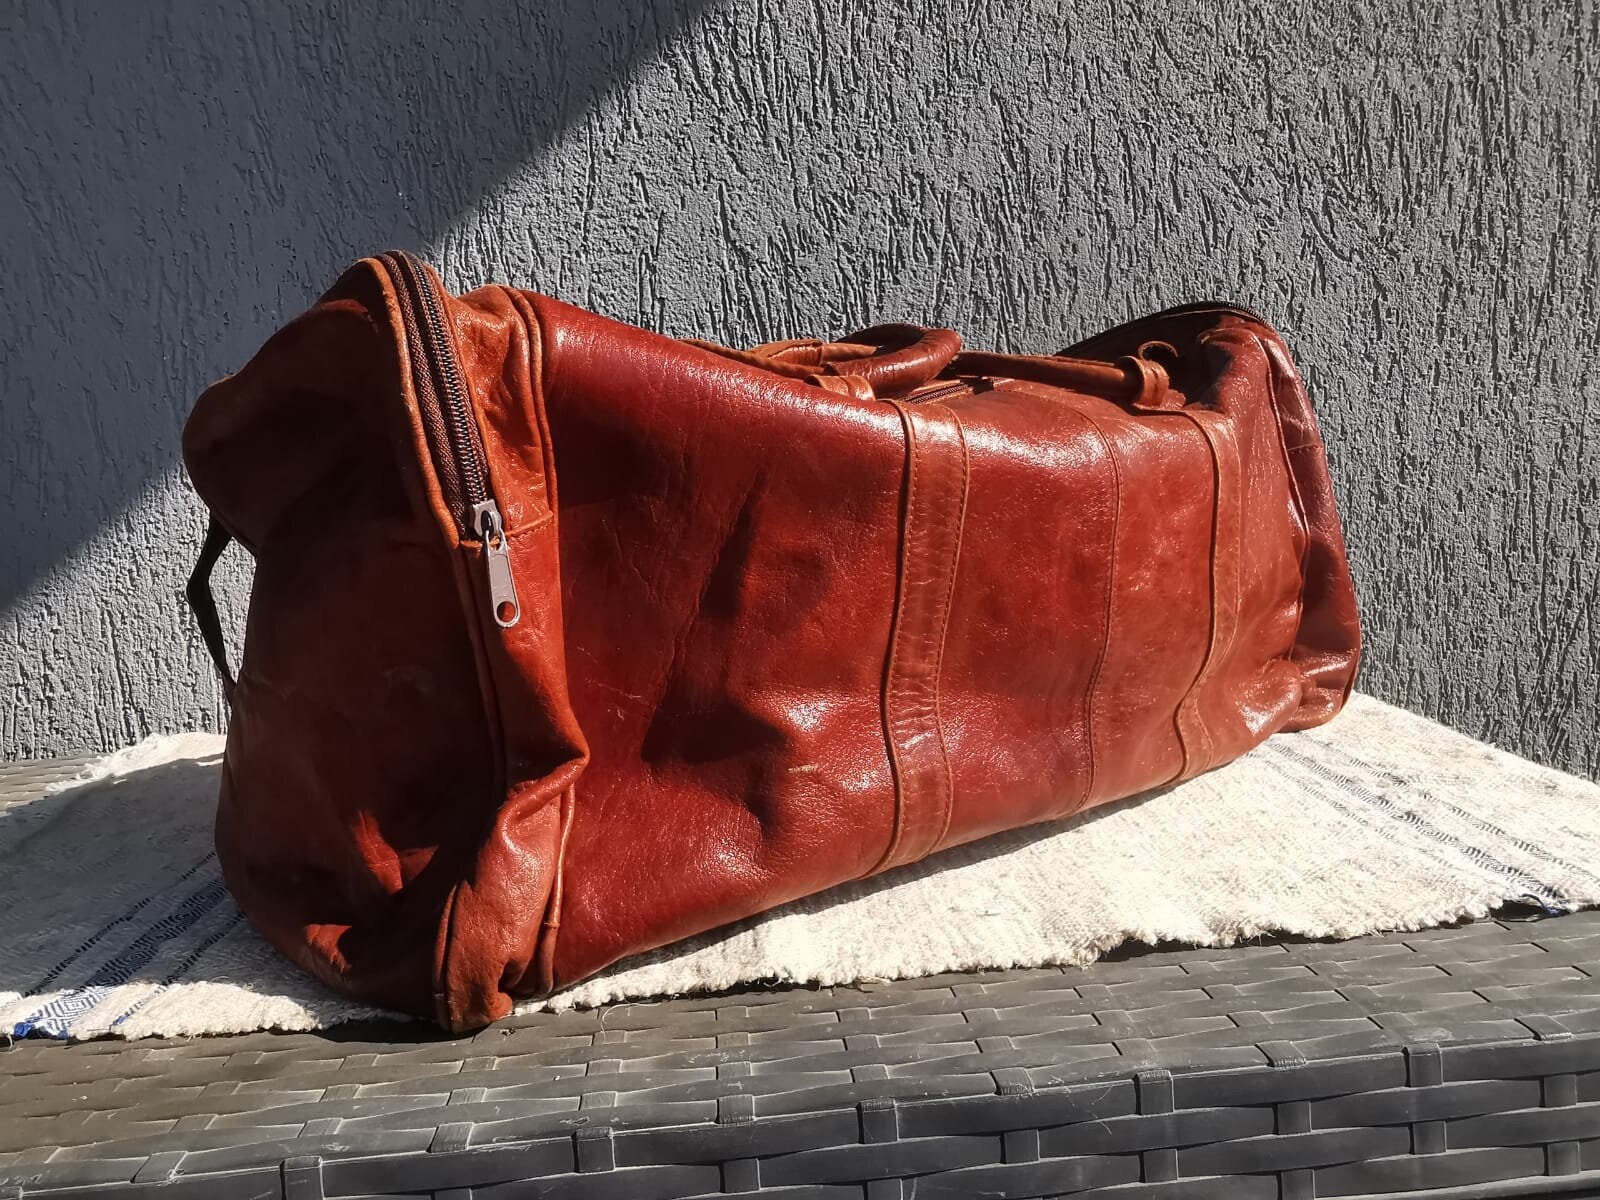 The “Hemingway” Buffalo Leather Duffle Bag [PREORDER] - Vintage